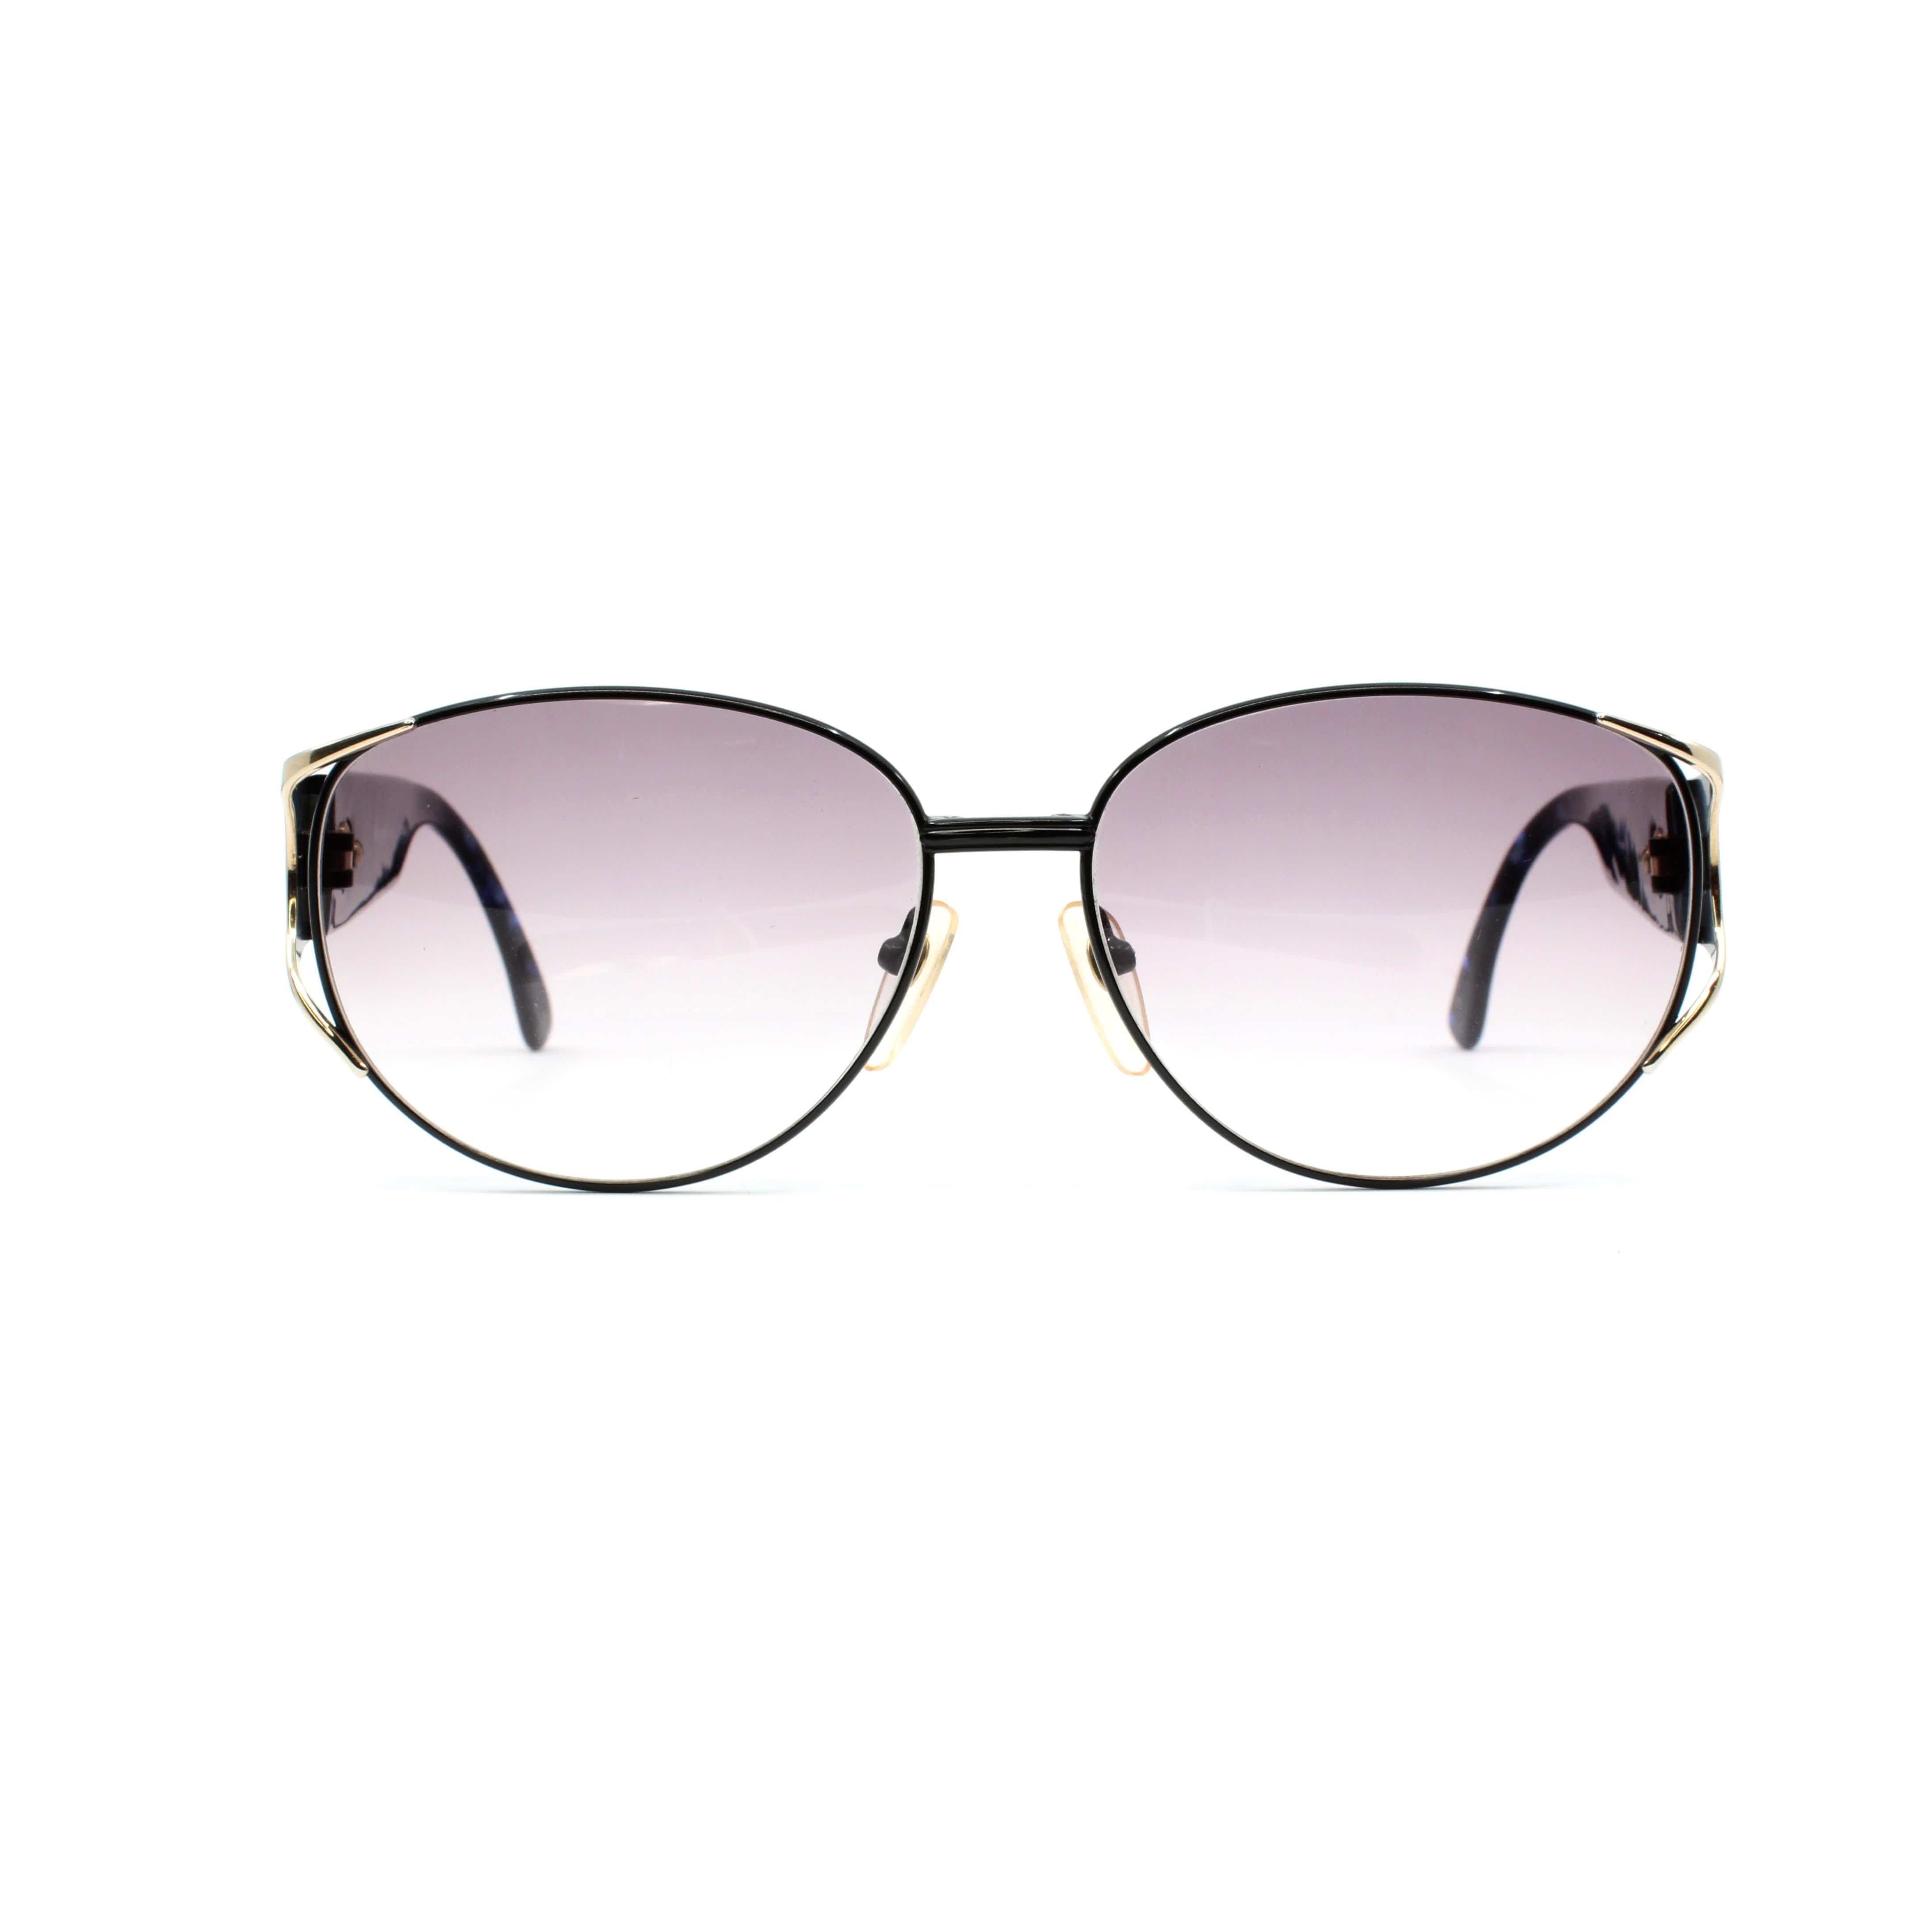 Vintage Yves Saint Laurent 31-4704 Sunglasses